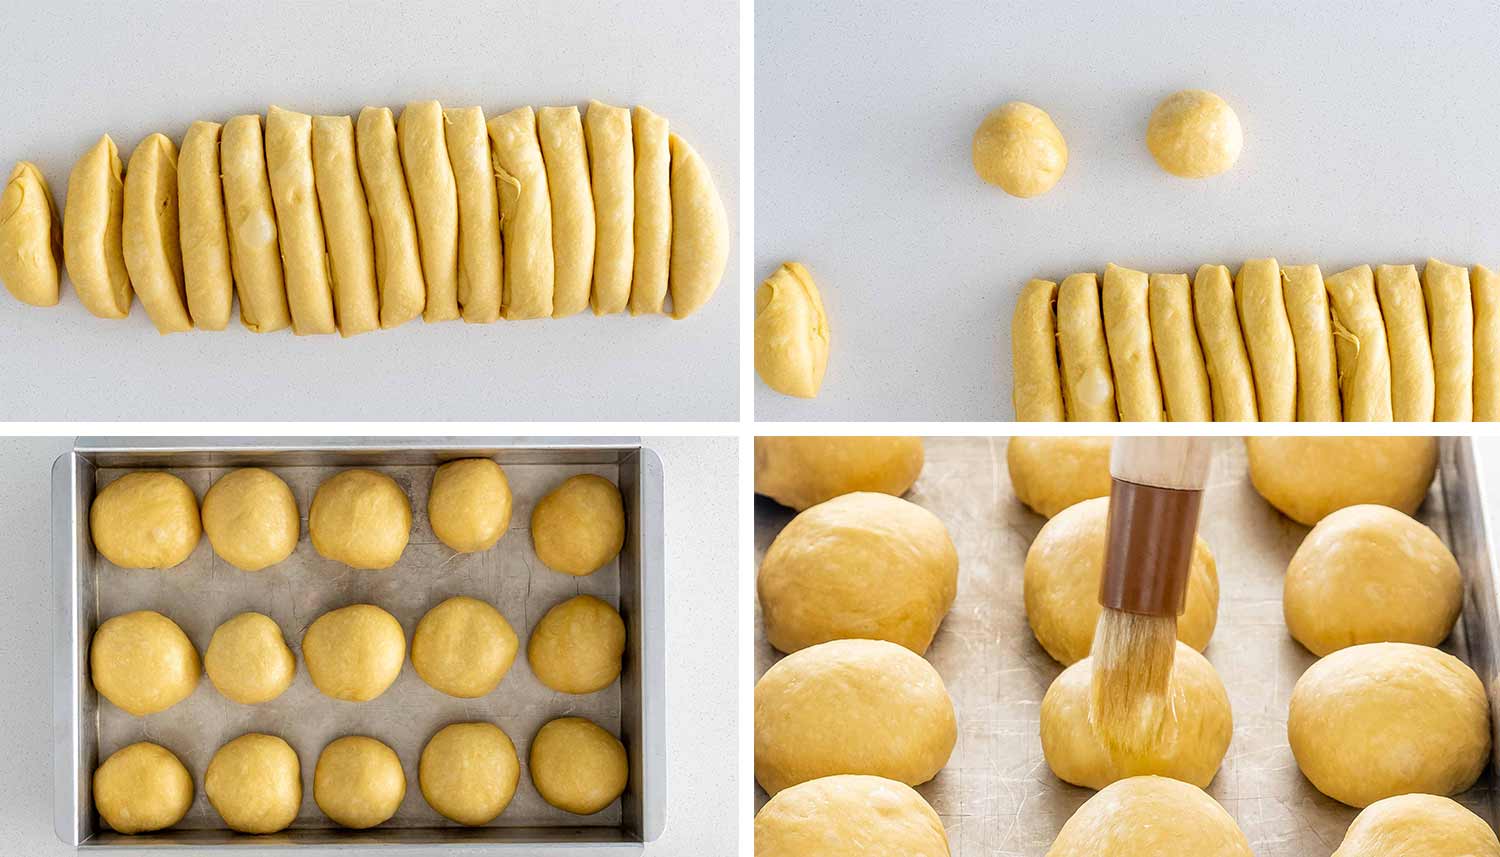 process shots showing how to make hawaiian rolls.